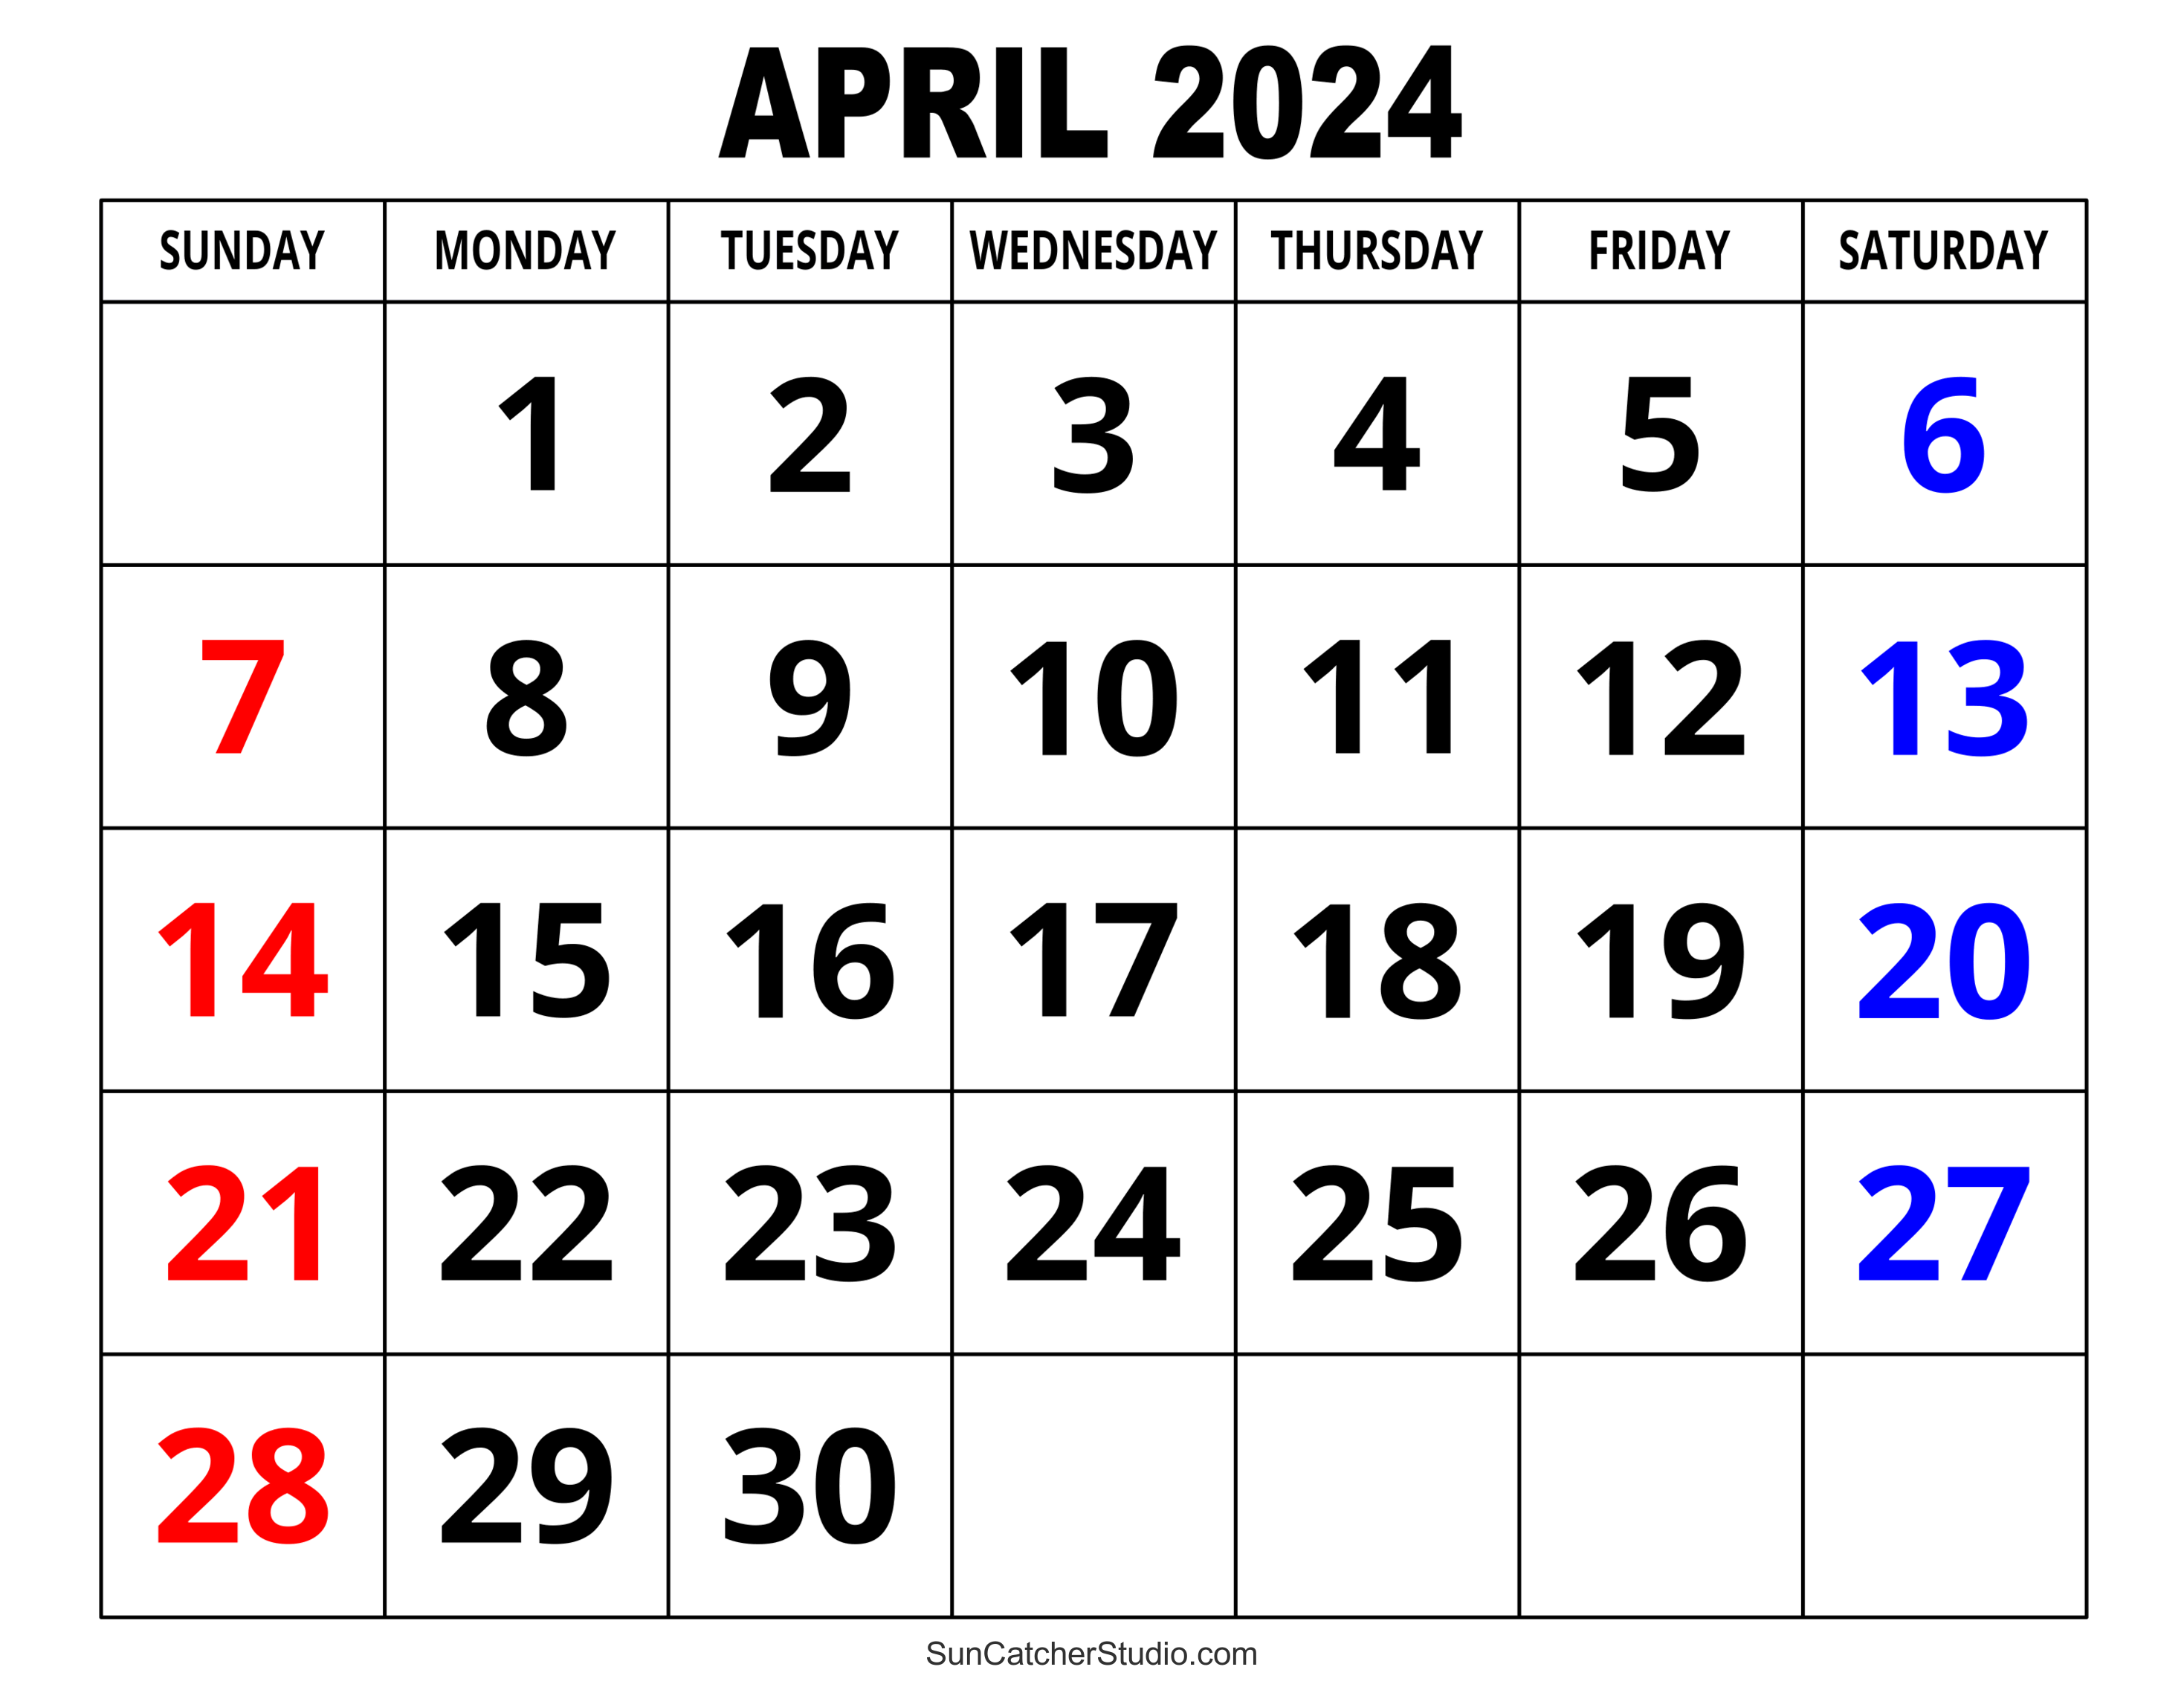 April 2024 Calendar (Free Printable) DIY Projects, Patterns